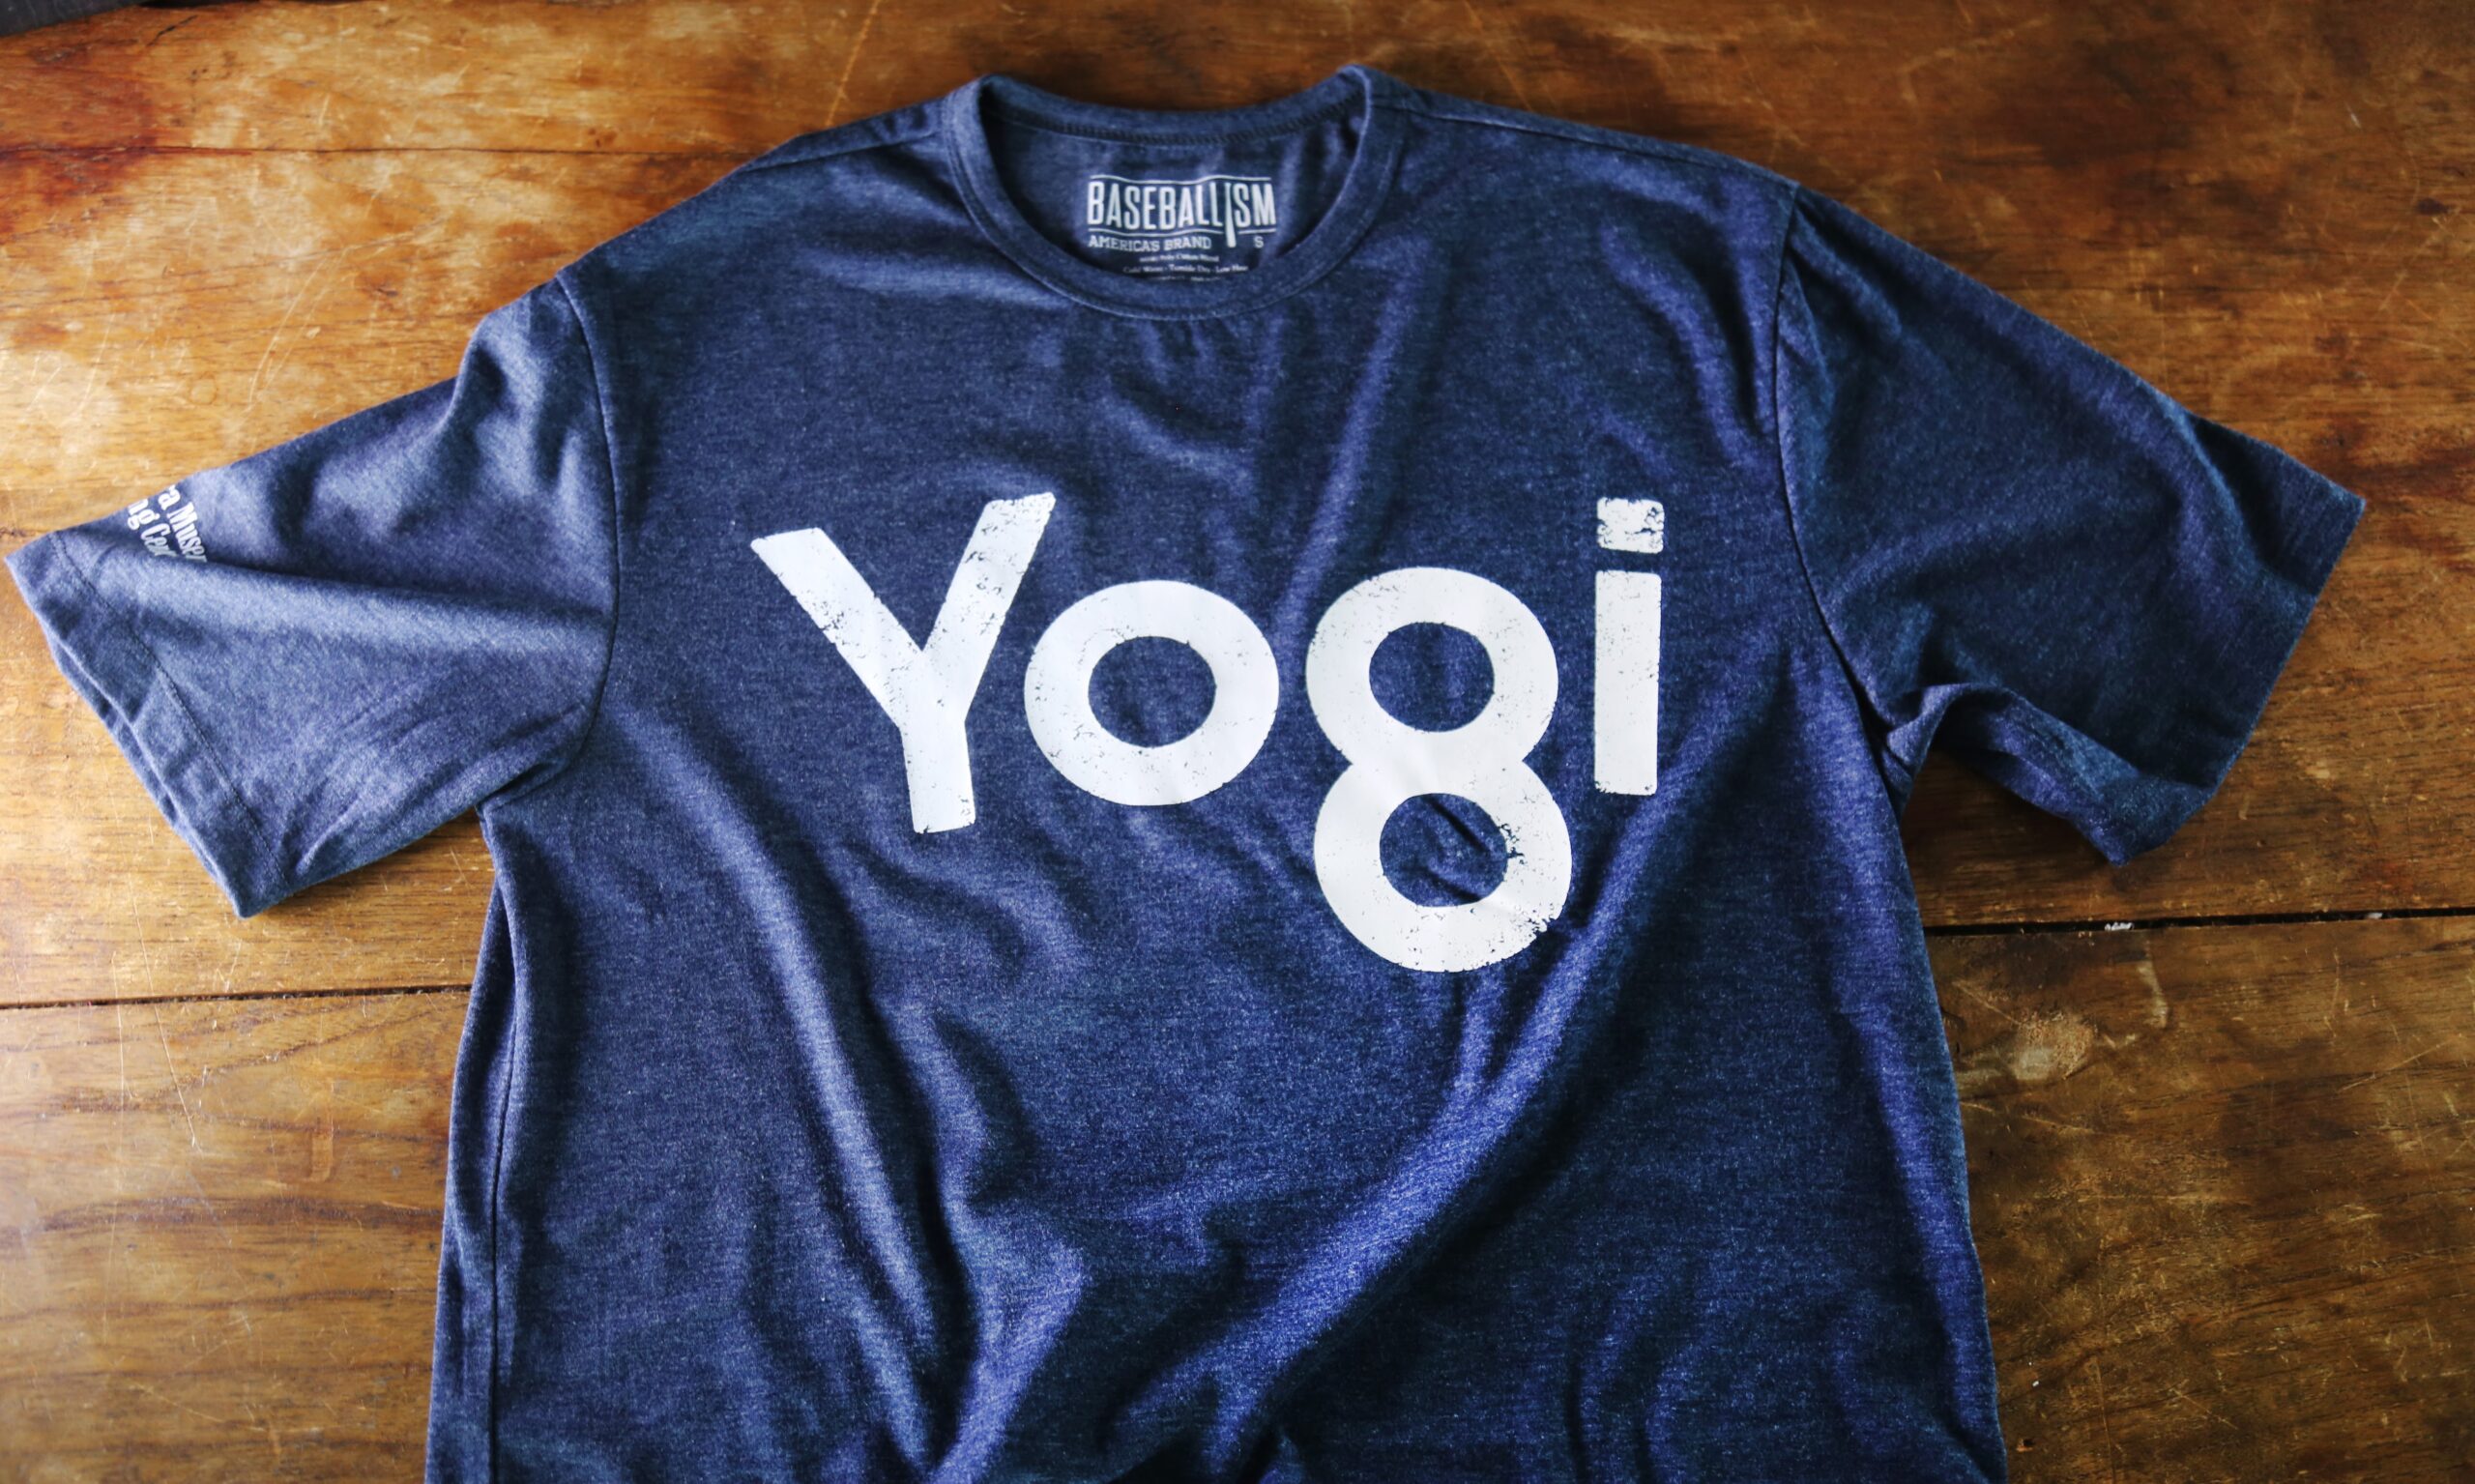 yogi berra t shirt